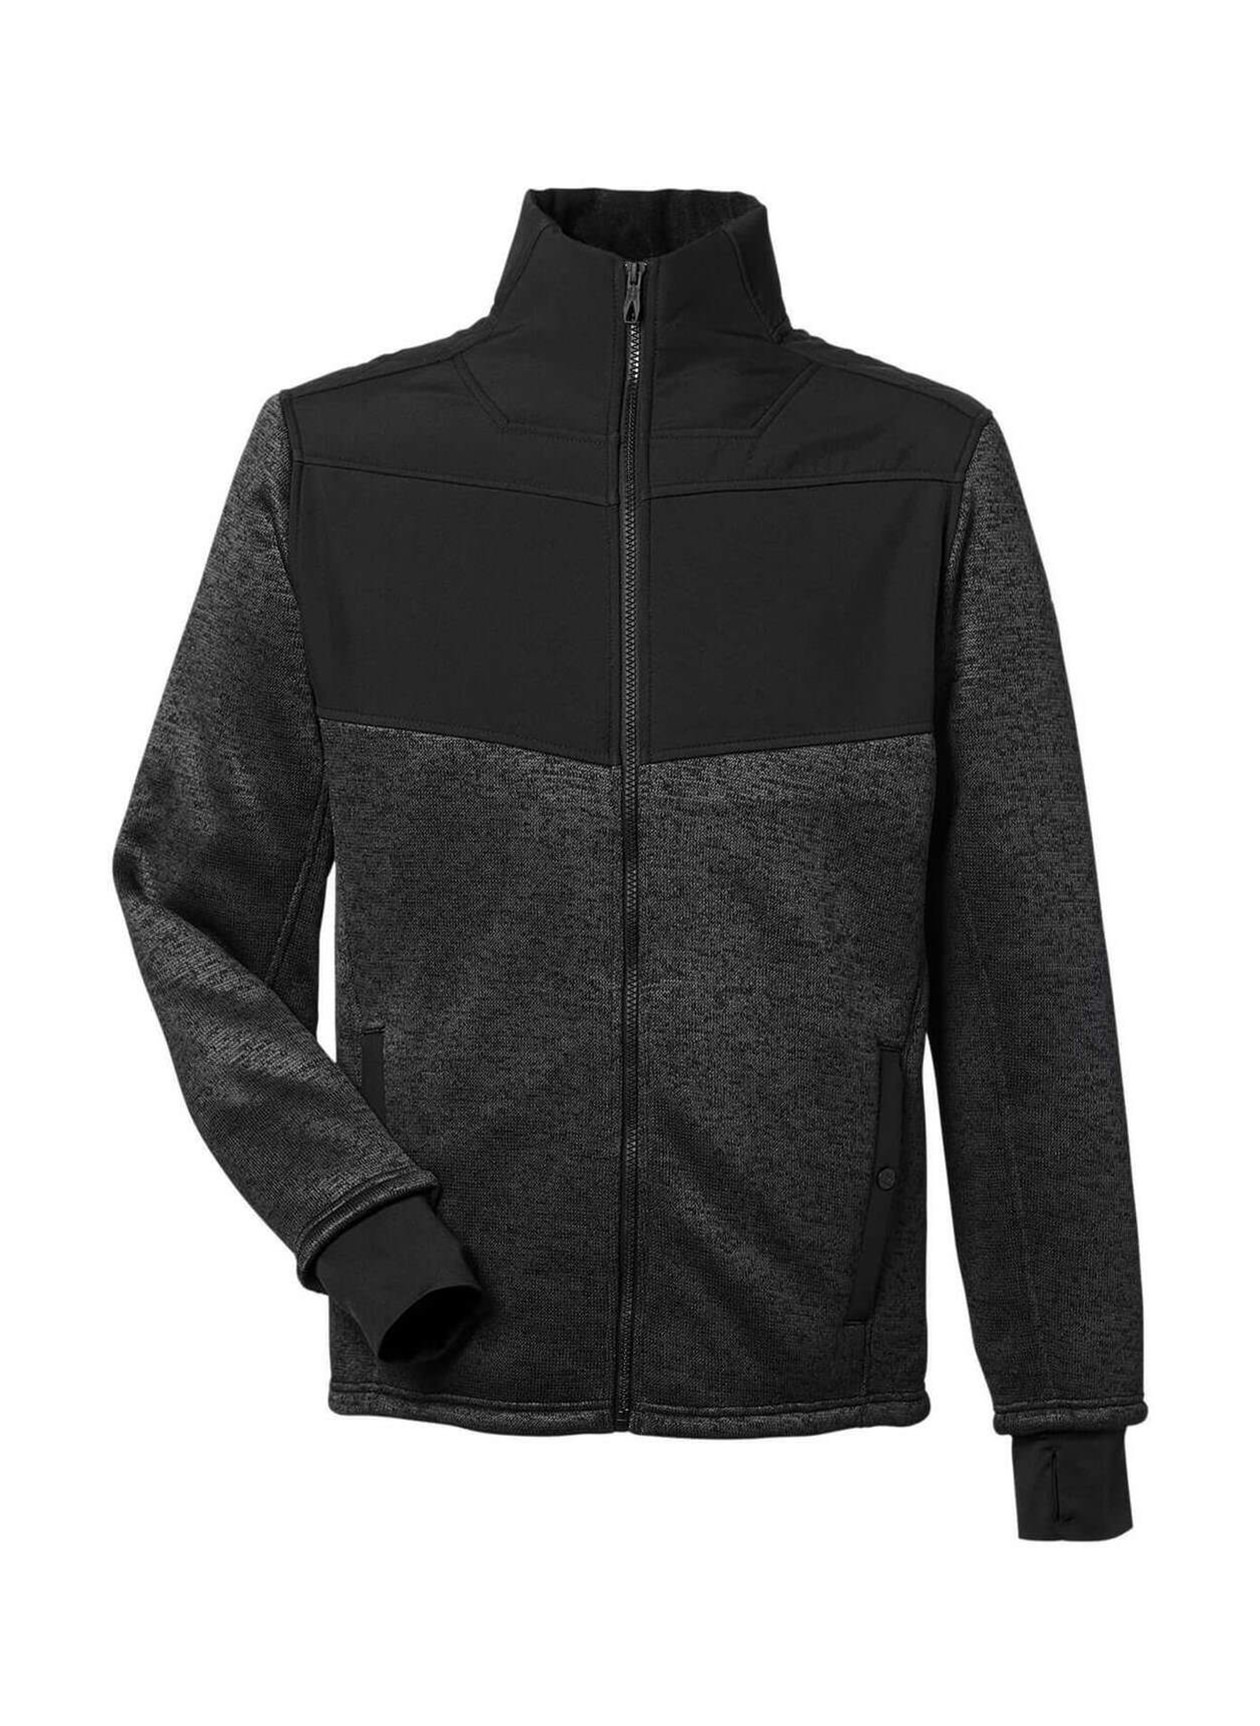 Spyder Men's Black Powder / Black Passage Sweater Jacket